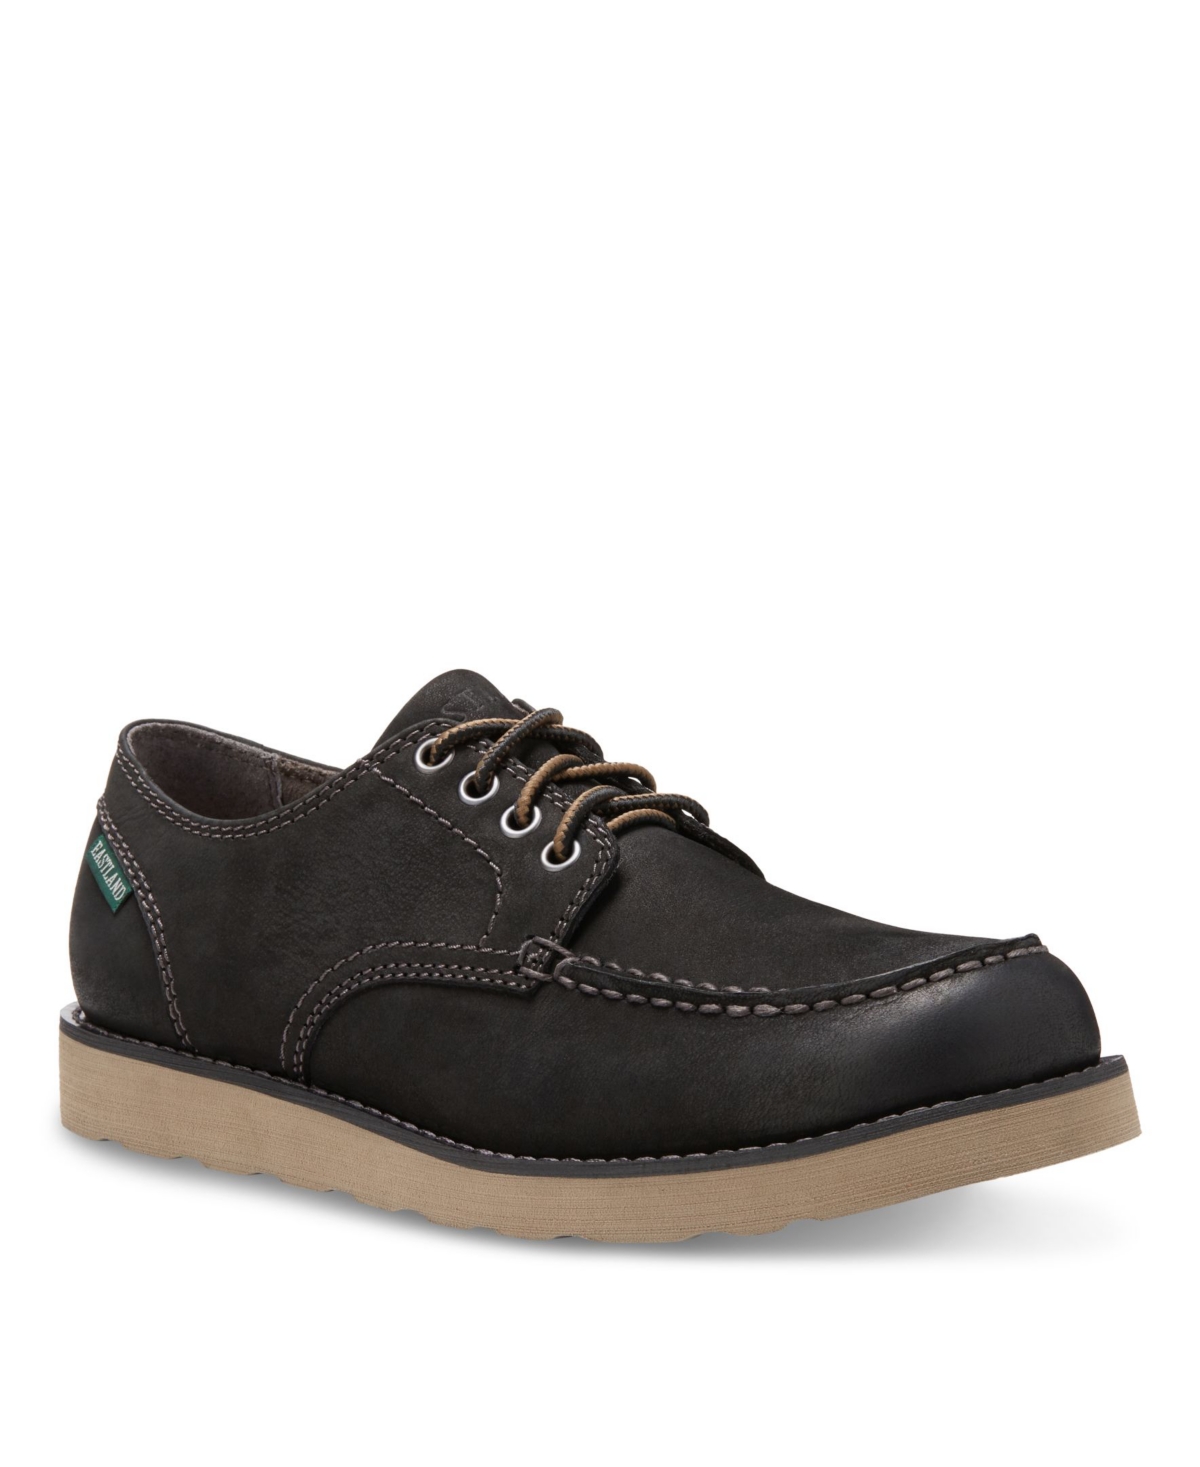 Men's Lumber Down Oxford Shoes - Black Nubuck